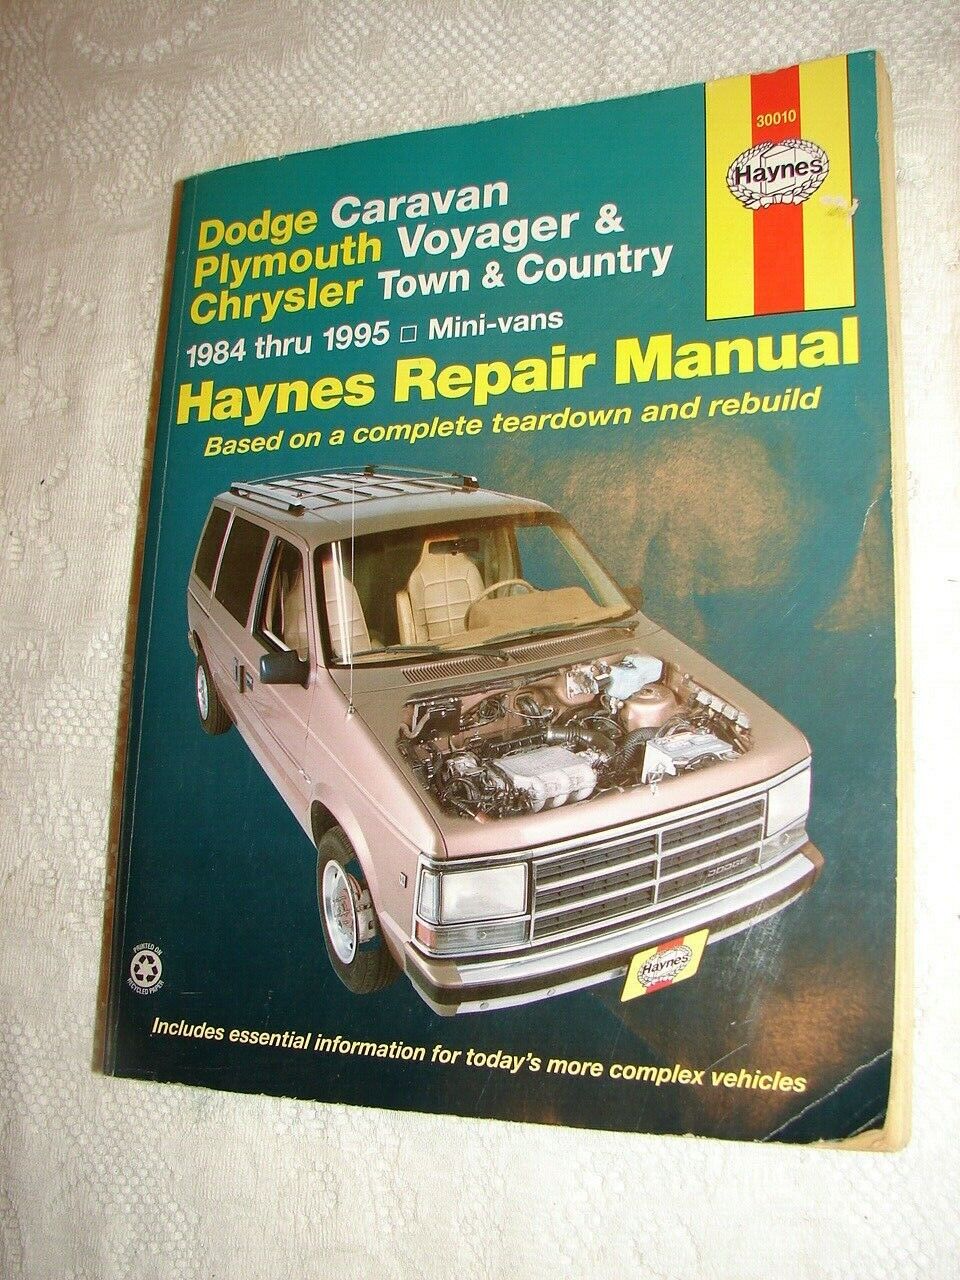 Haynes 1984-1995 Dodge Caravan Plymouth Voyager Service Repair Manual #30010